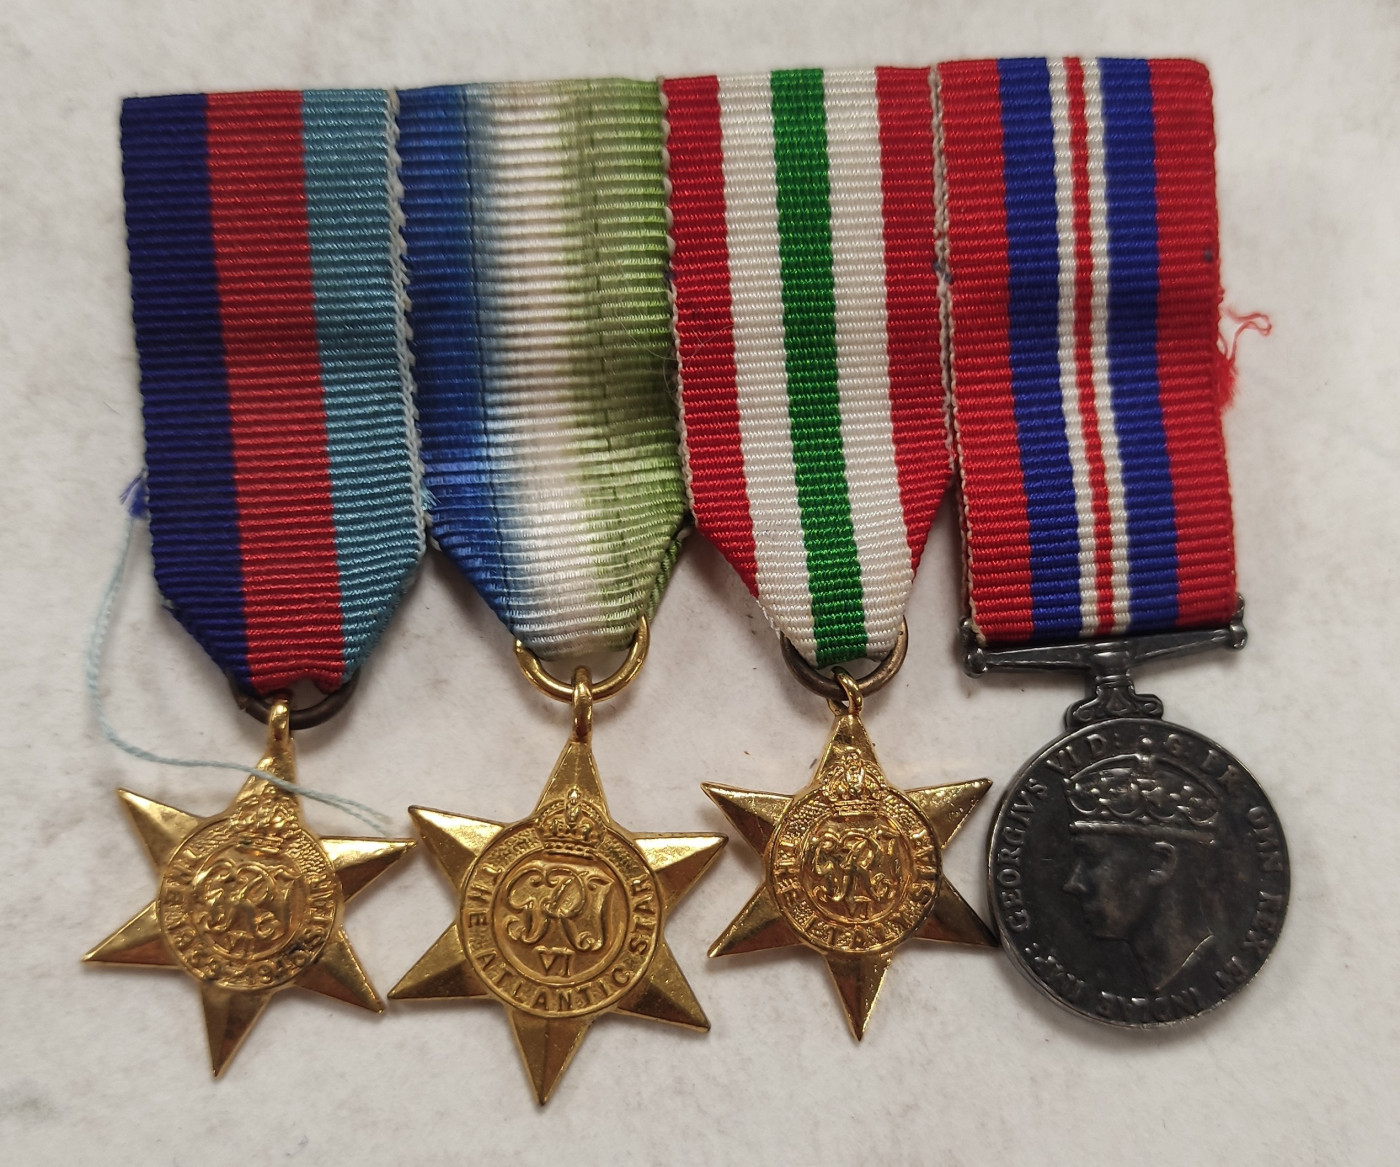 dress miniature medals